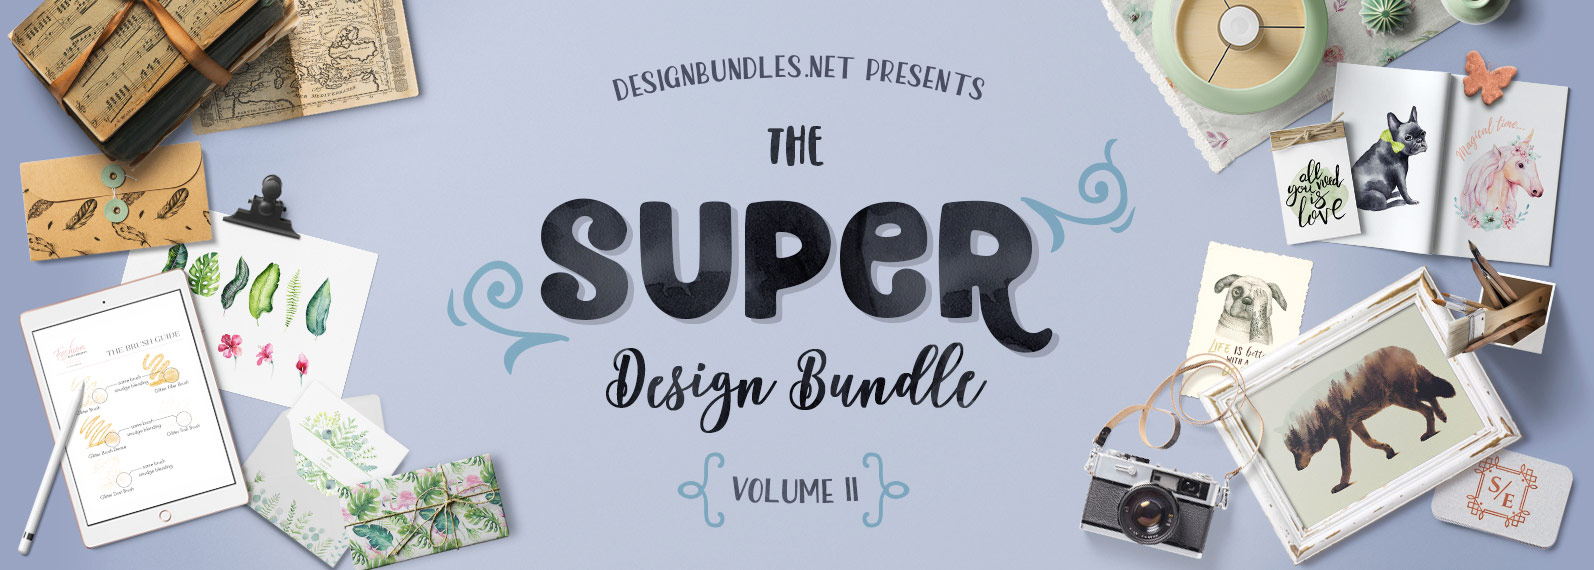 The-Super-Design-Bundle-Vol-II-Cover.jpg